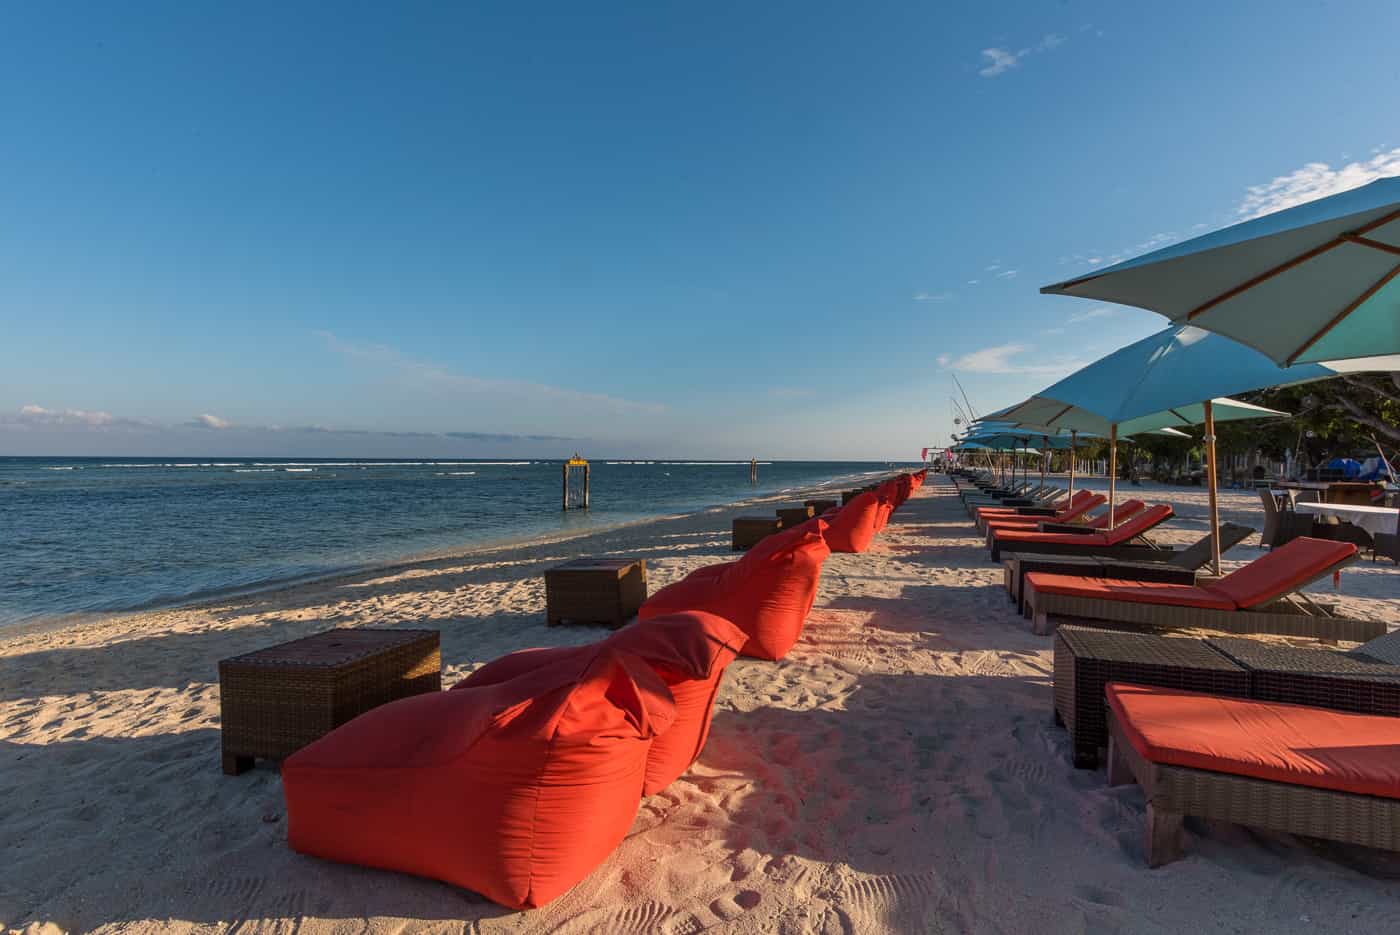 Beachfront chairs for sunset views at Hotel Ombak Sunset in Gili Trawangan Island of Lombok Indonesia